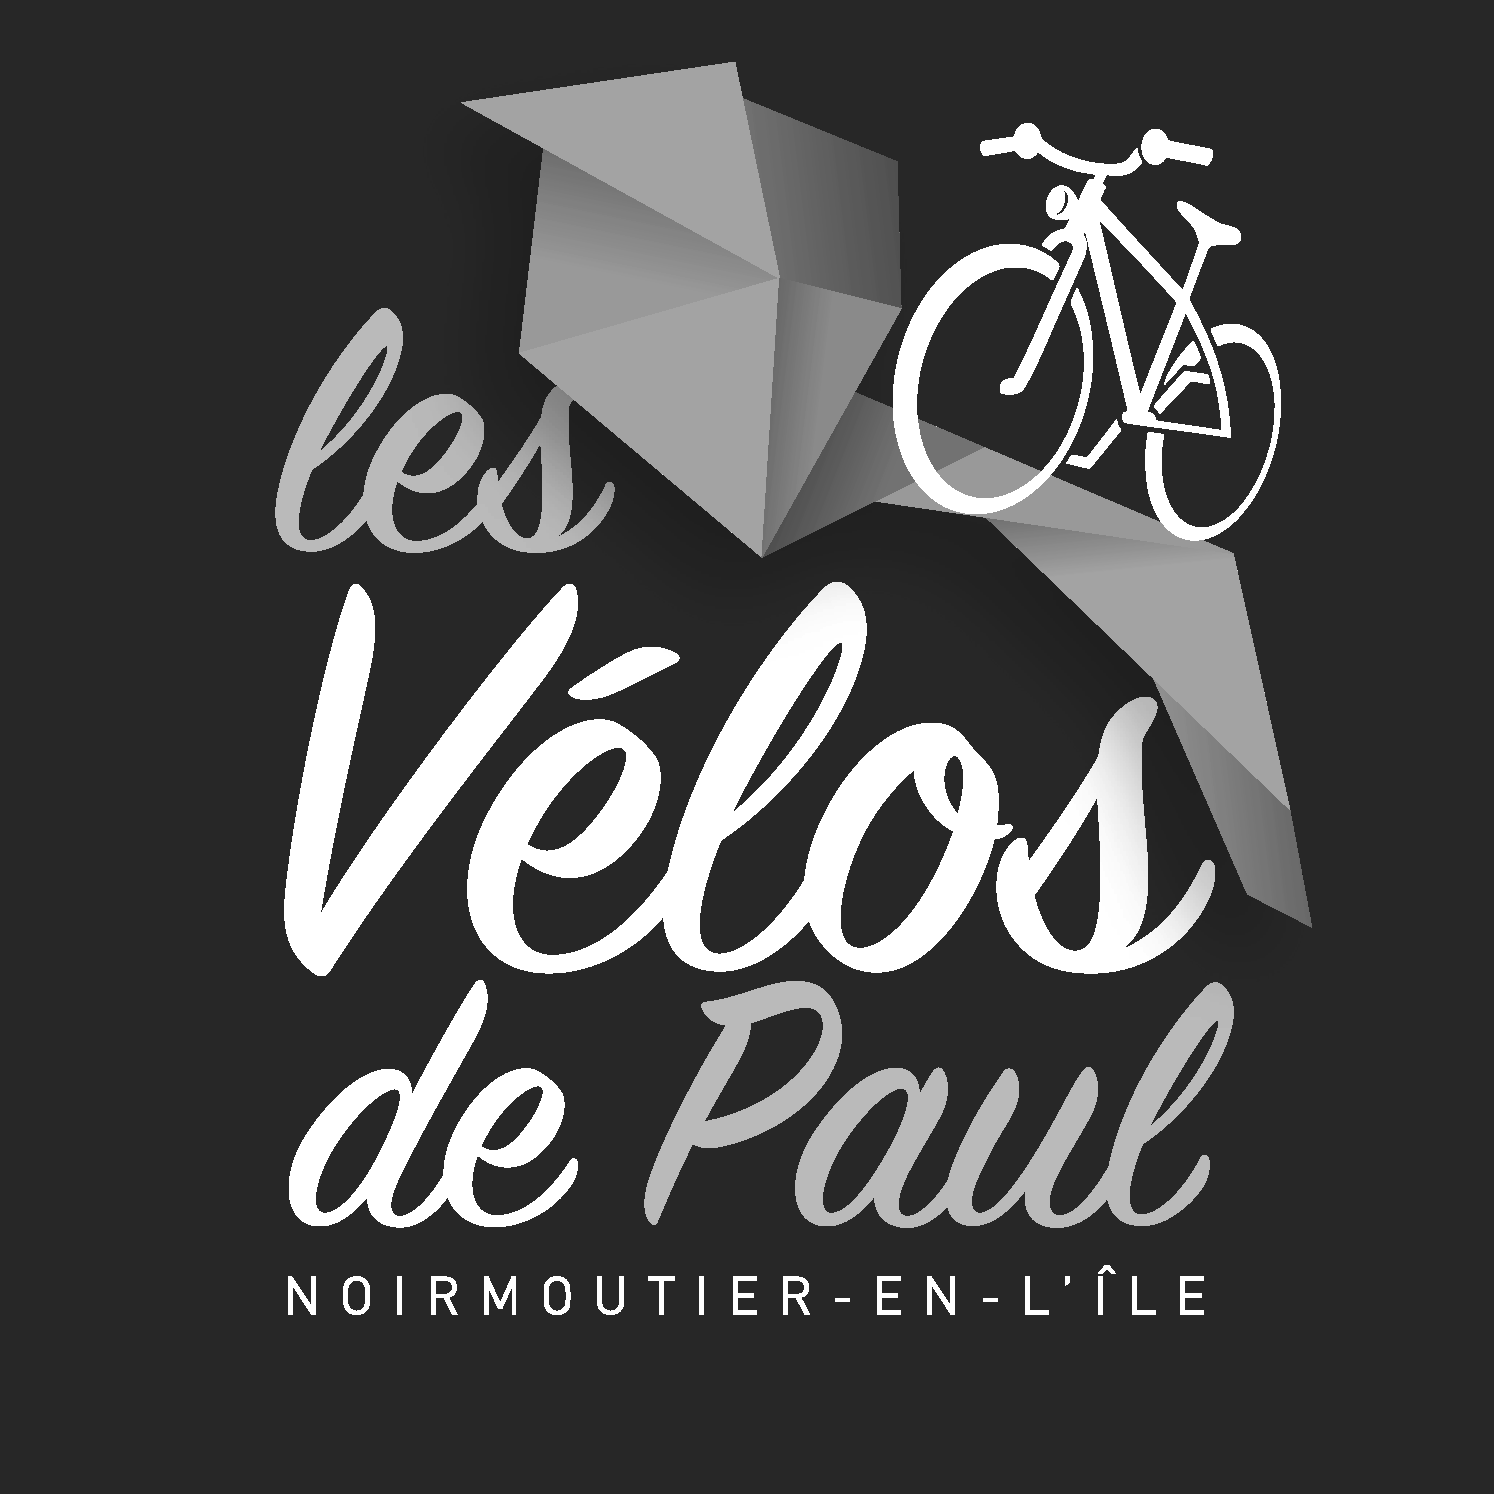 Les Vélos de Paul